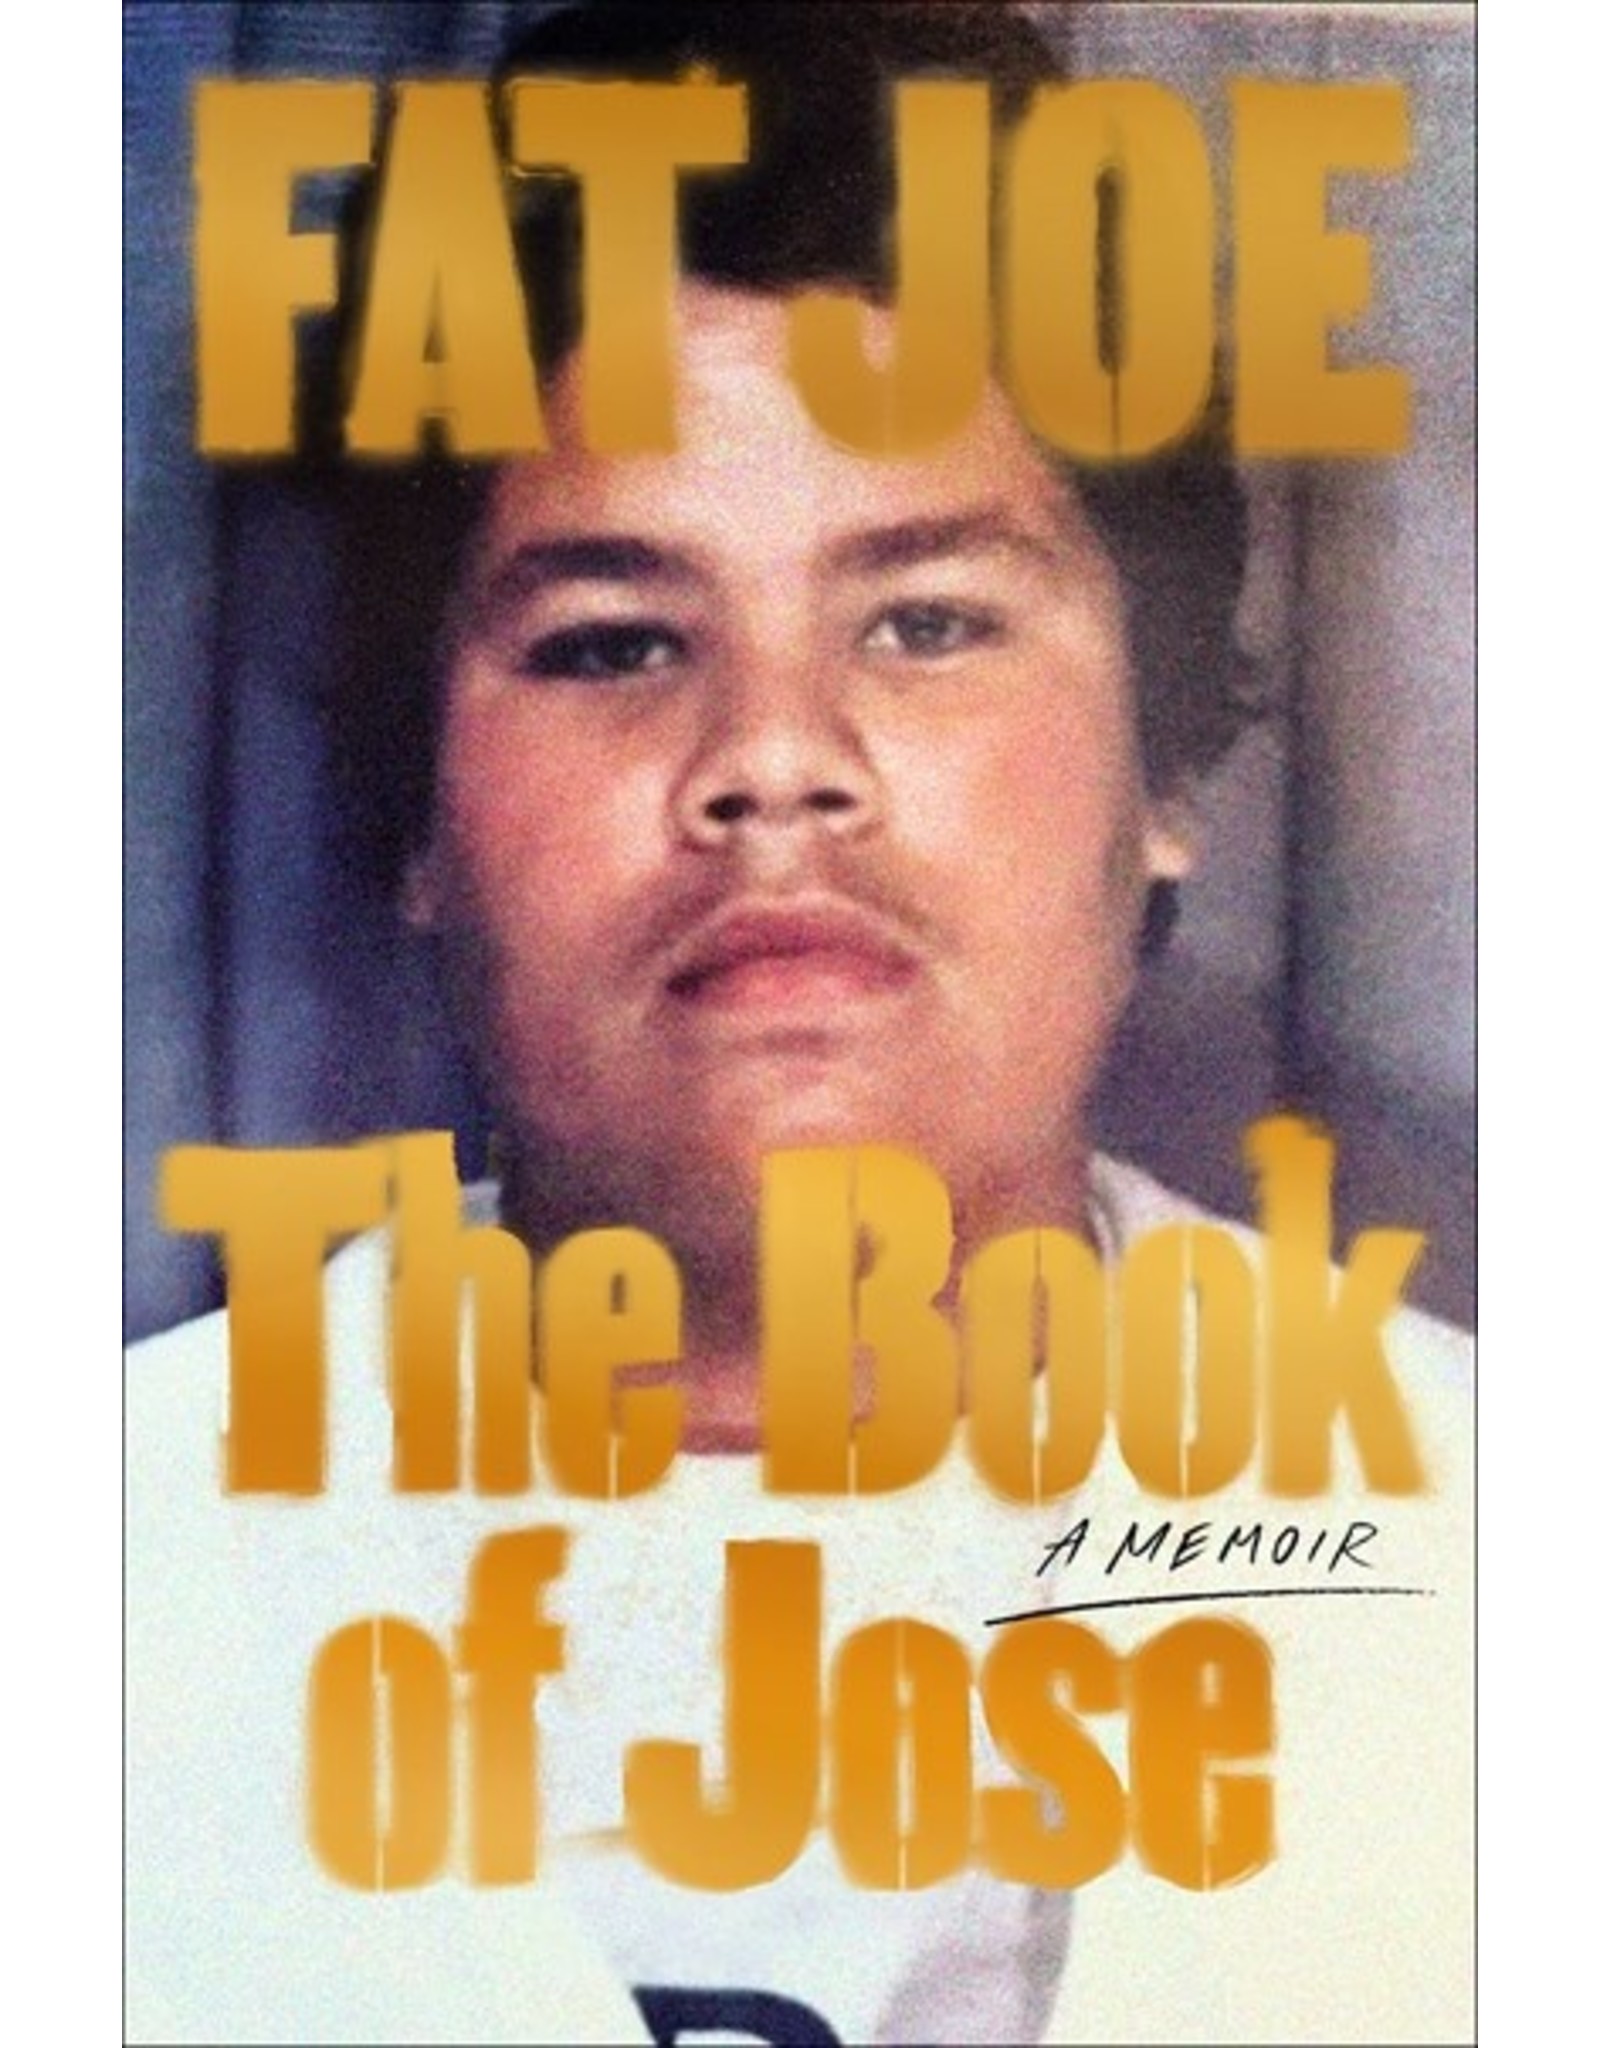 The Book of Jose: A Memoir by Fat Joe